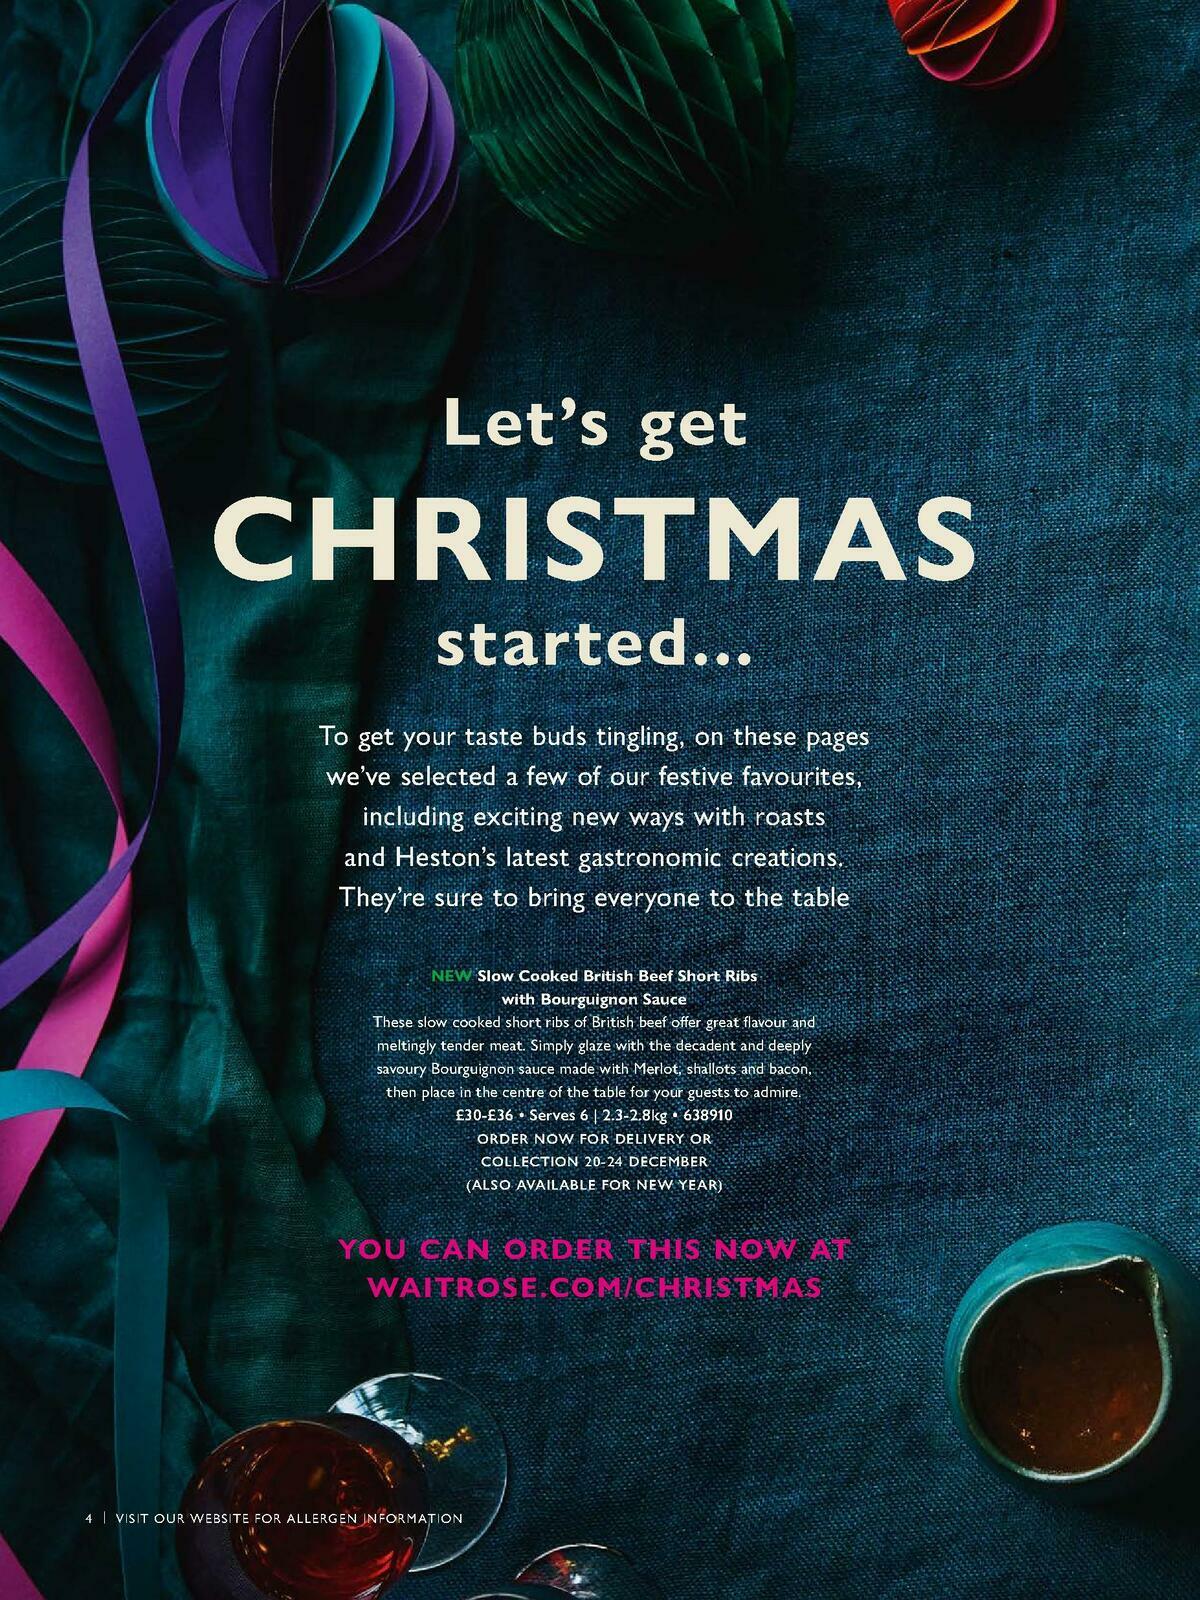 Waitrose Christmas Offers from 1 October